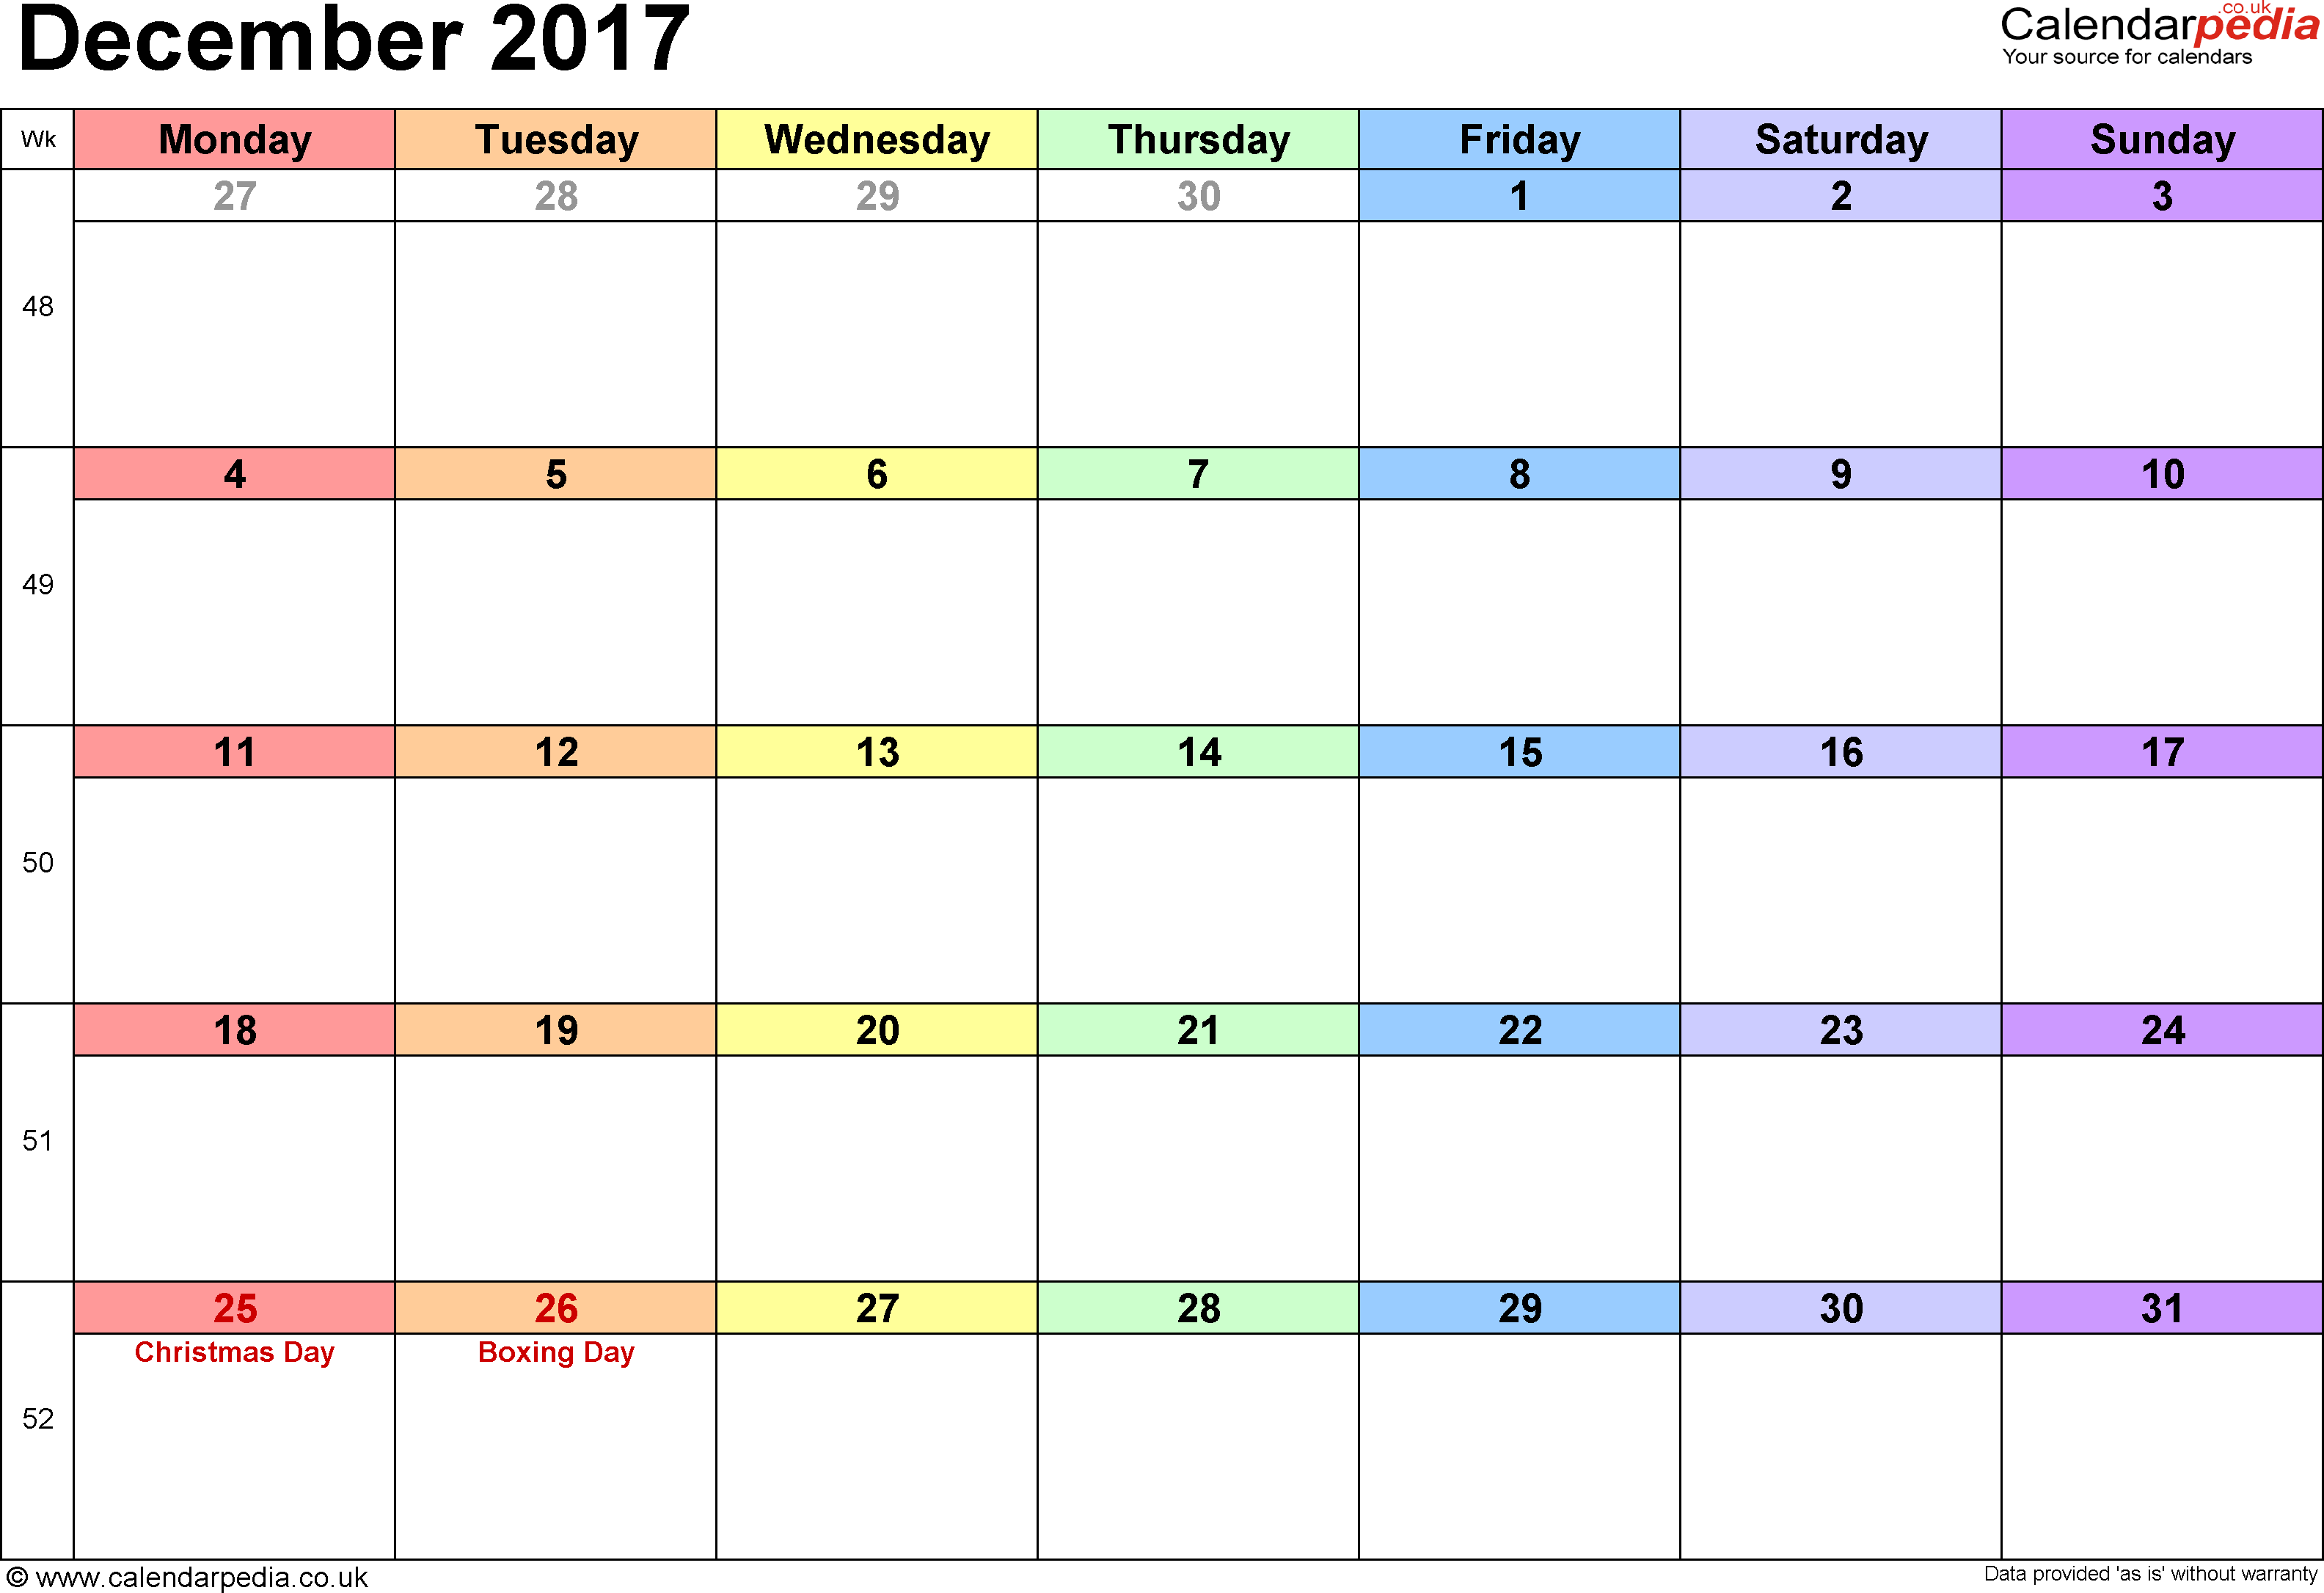 Calendar December 2017 UK, Bank Holidays, Excel/PDF/Word Templates